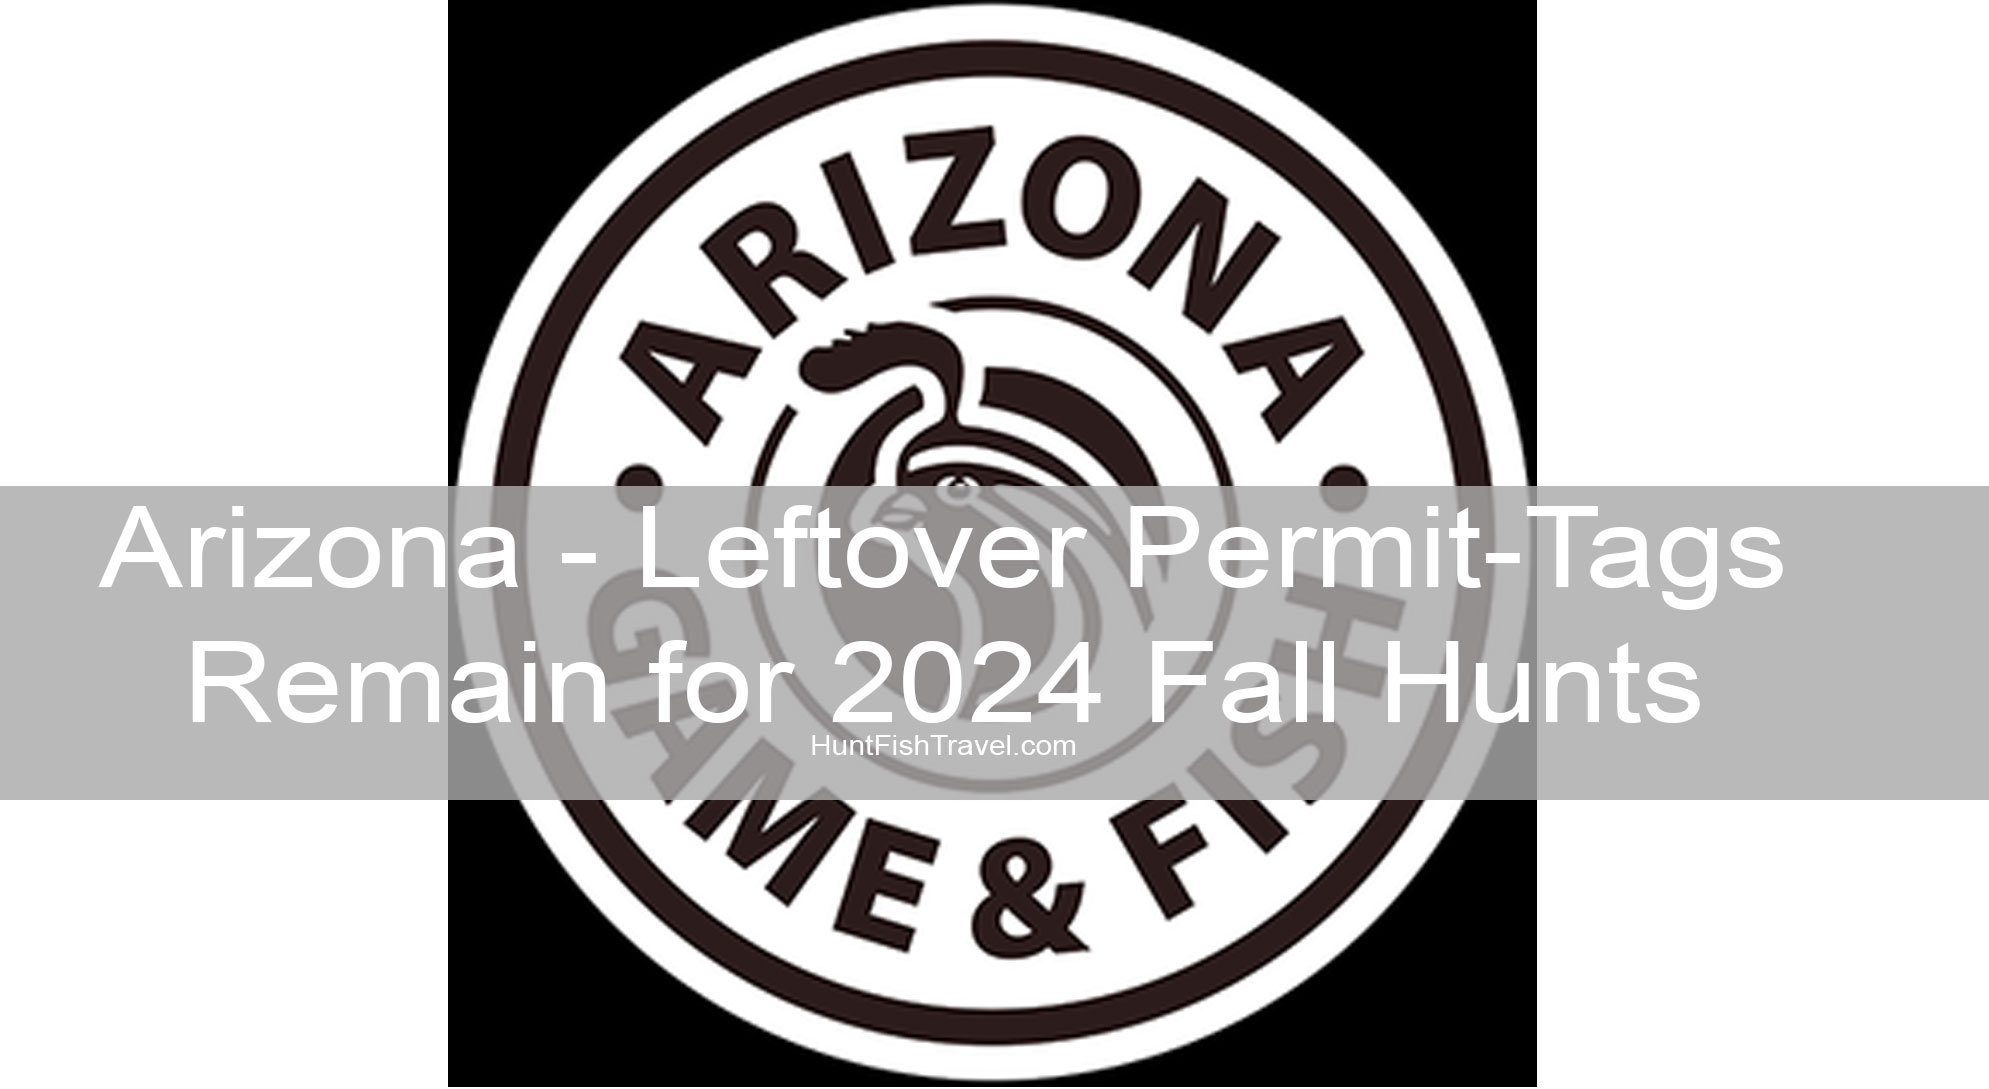 Arizona – Leftover Permit-Tags Remain for 2024 Fall Hunts